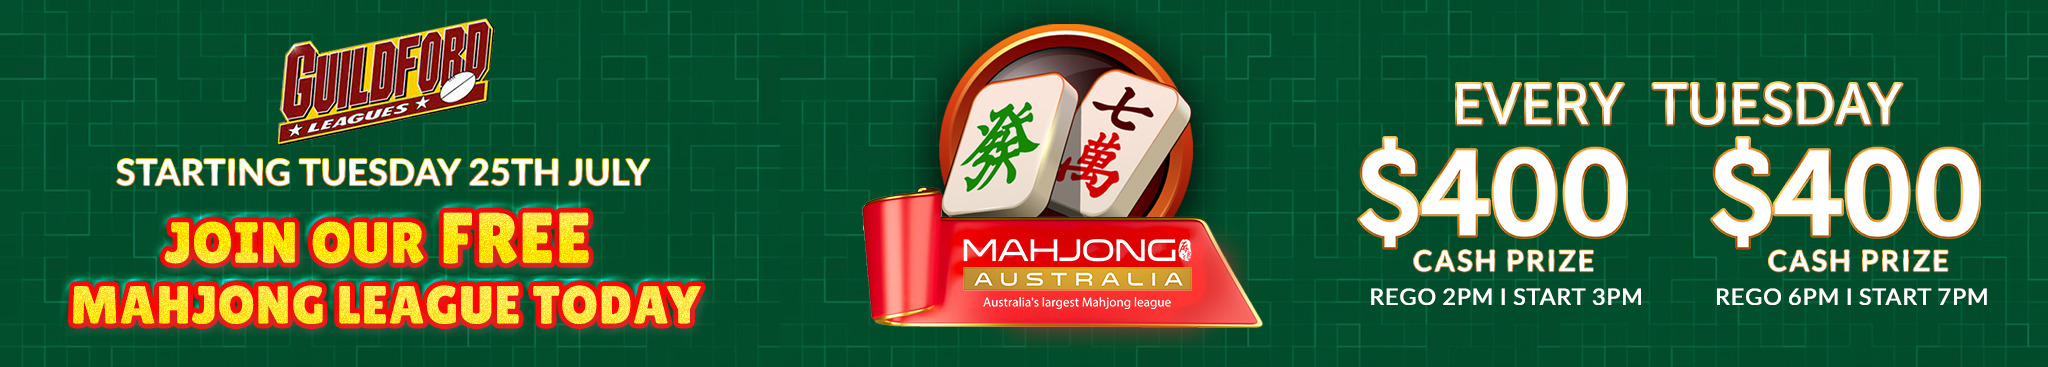 Tuesday Mahjong at Guildford Leagues